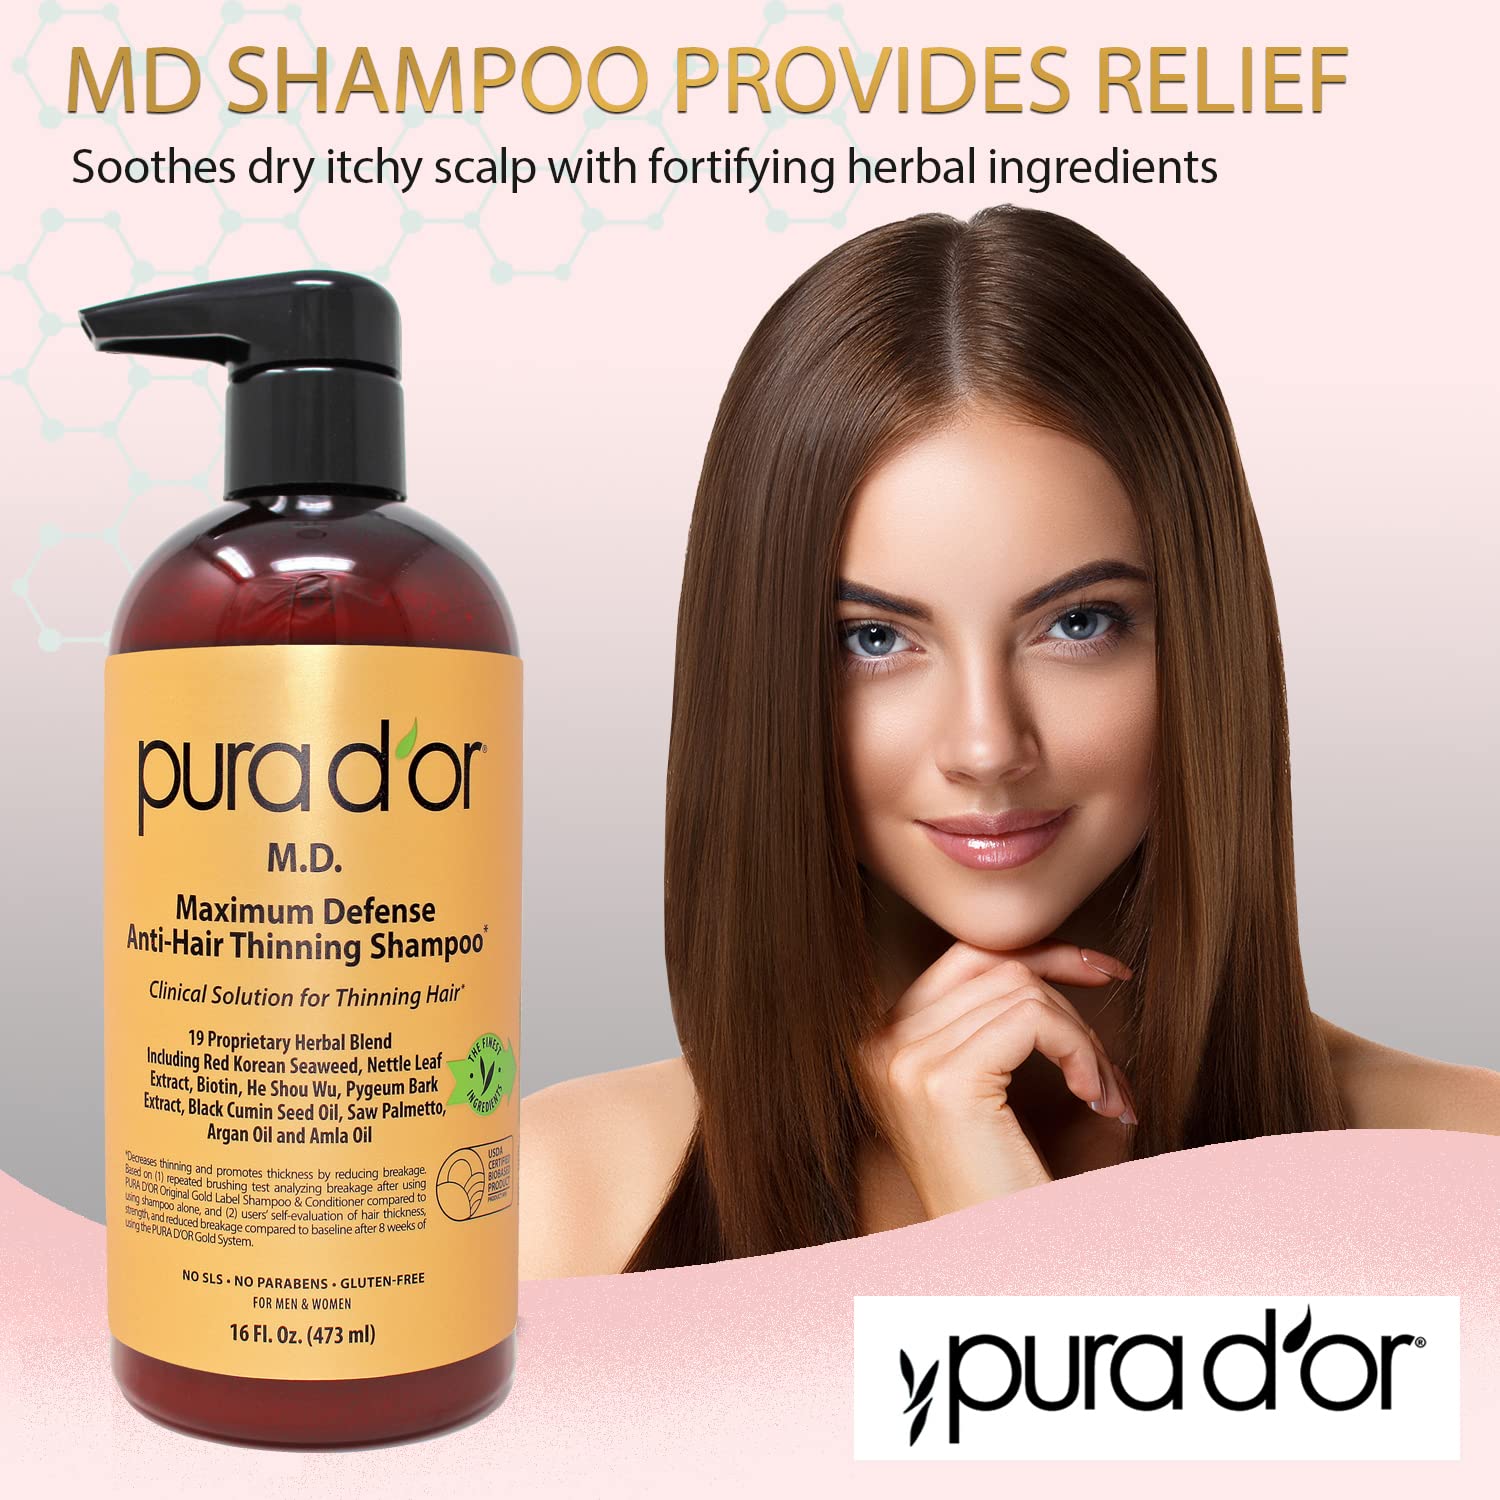 Mua PURA D'OR MD Anti-Hair Thinning Shampoo w/ % Coal Tar, Biotin  Shampoo (16oz) 19+ DHT Herbal Blend for Dry & Itchy Scalp, No Sulfates, For  Men & Women (Packaging Varies) trên